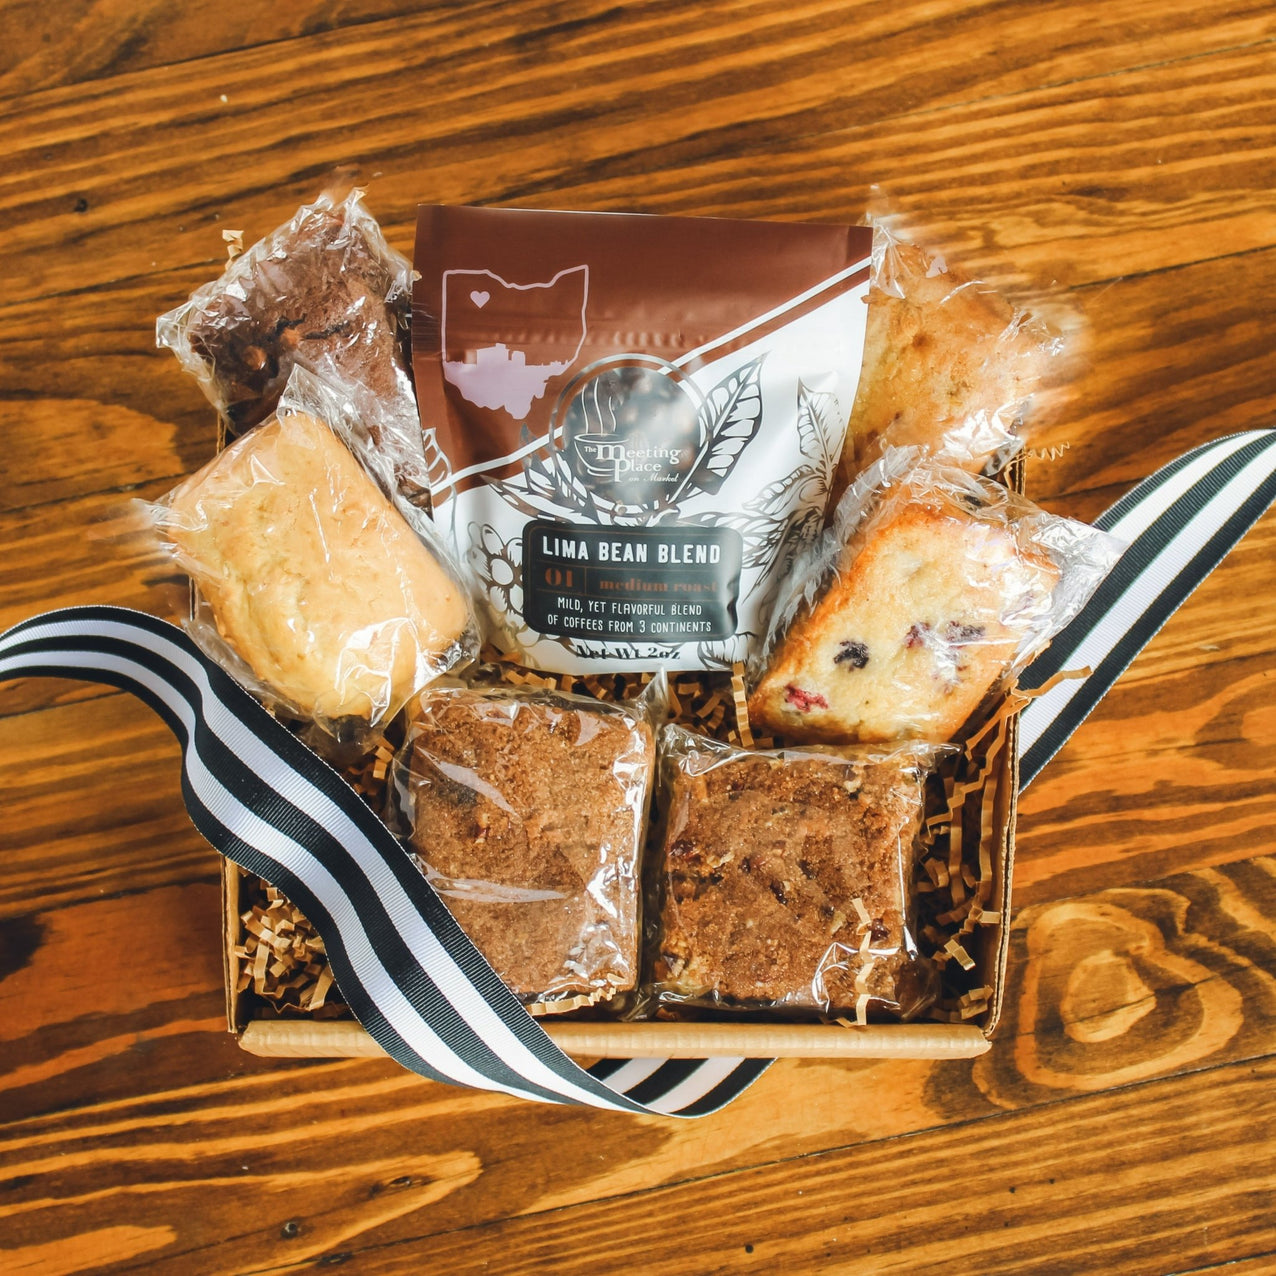 Junior Breakfast Gift Basket | Baked Goods plus Coffee or Tea! Birthday Gift Basket - The Meeting Place on Market